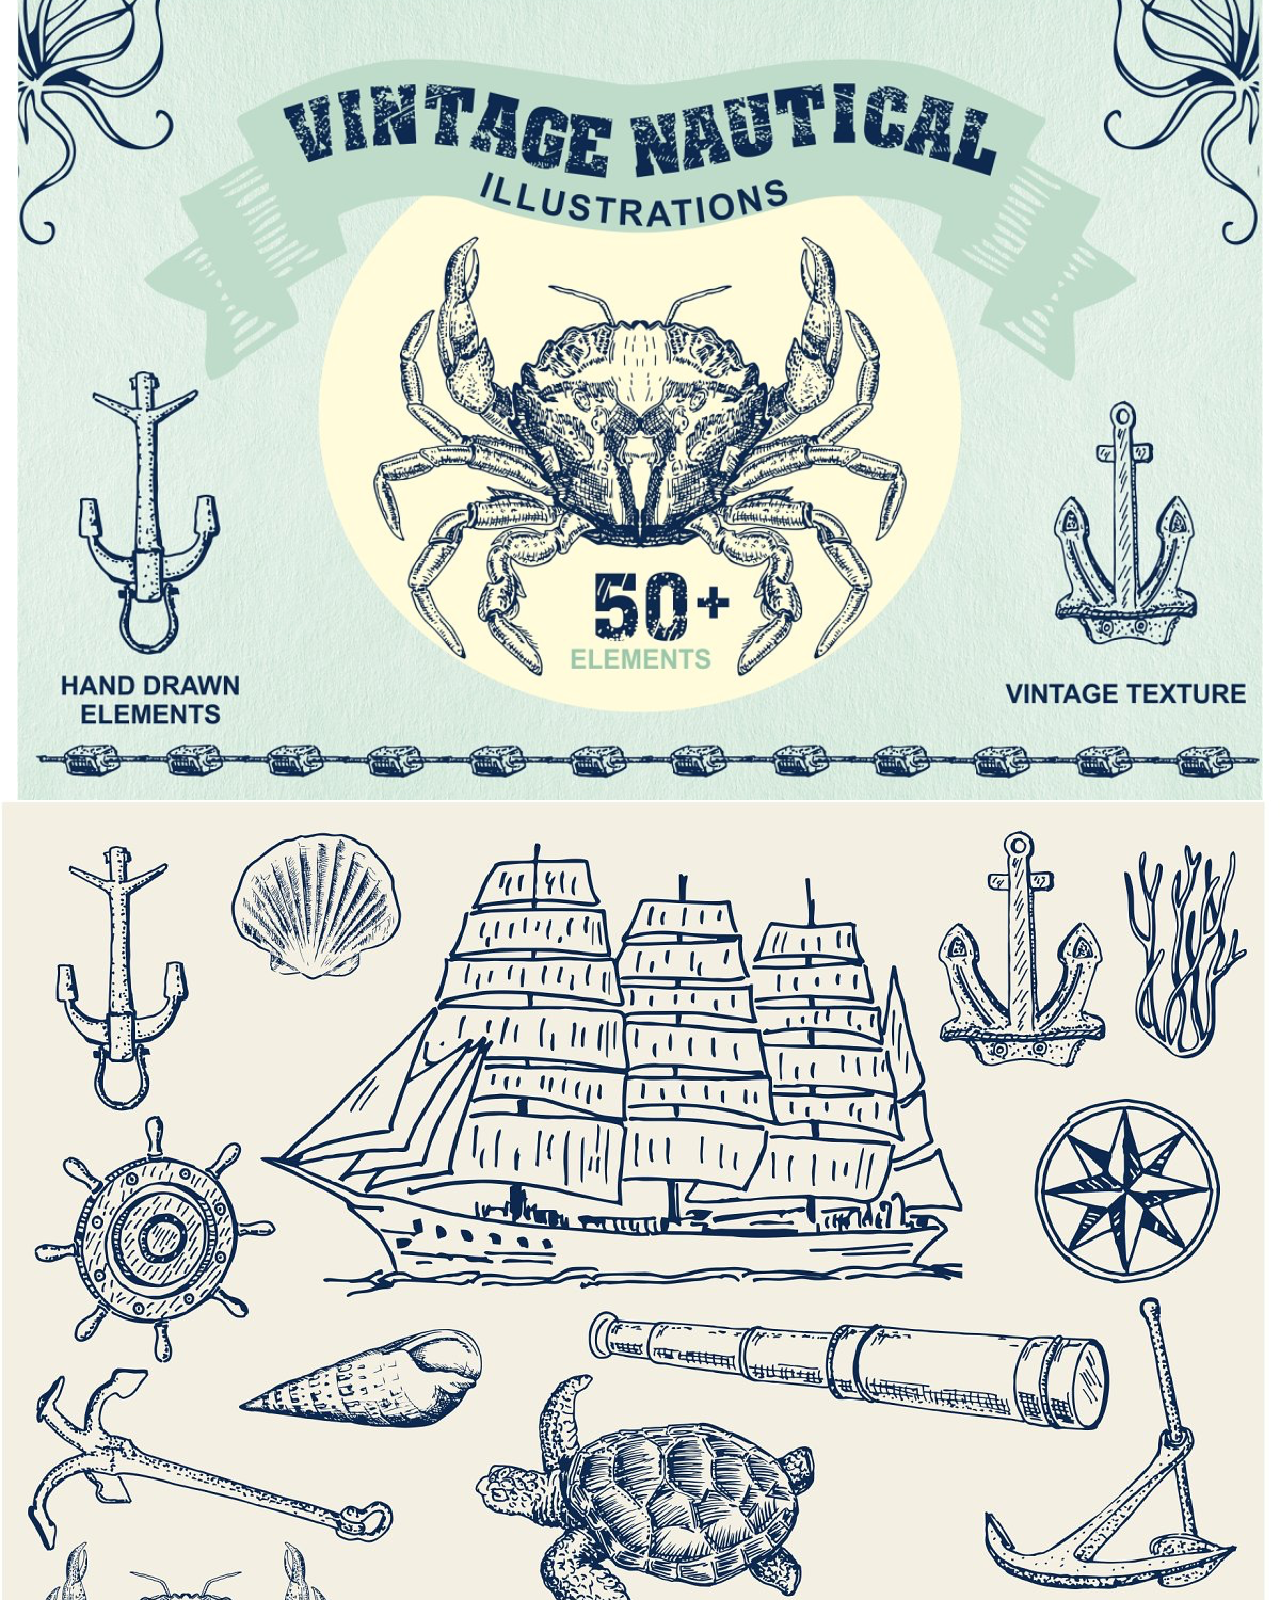 Sea nautical vintage illustrations pinterest image preview.